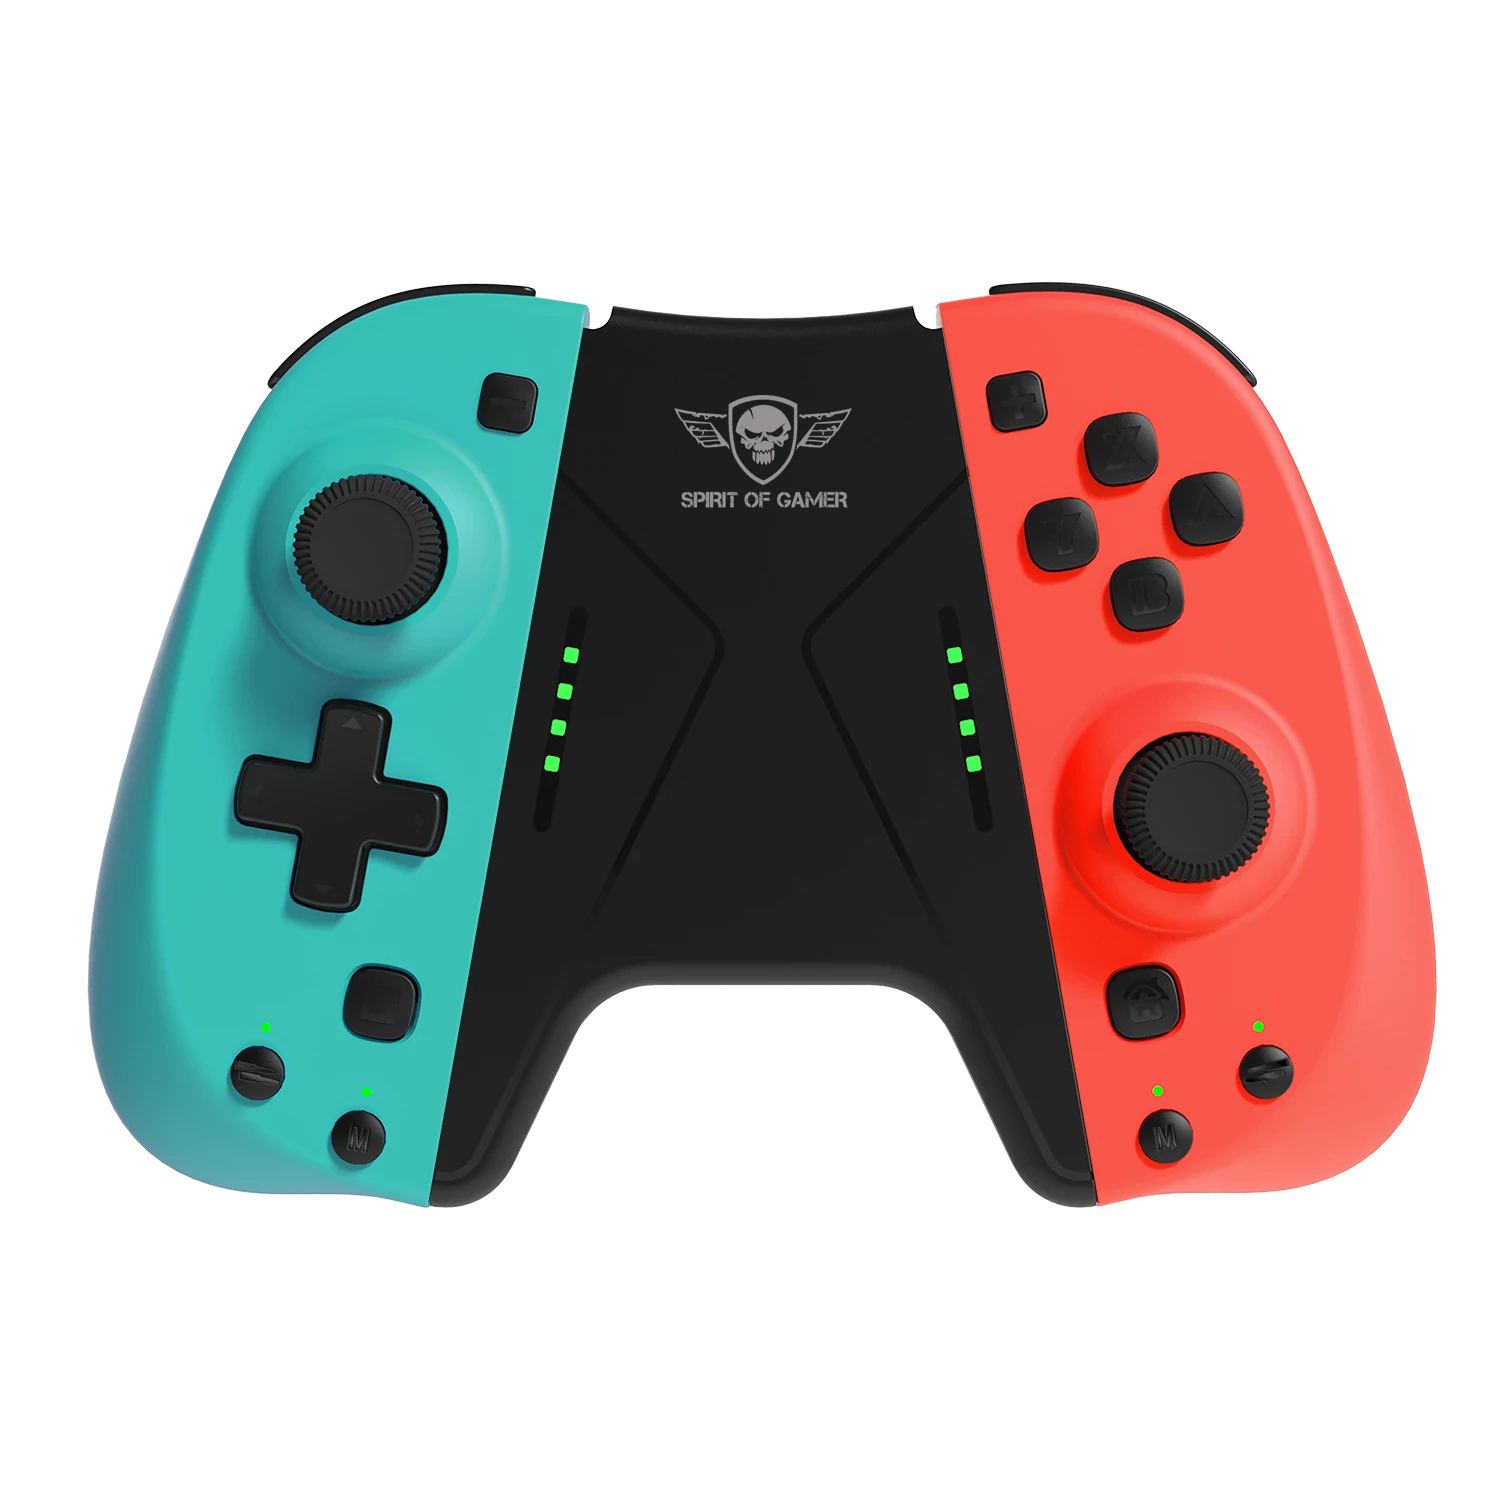 Controller Bluetooth Spirit of Gamer My Joy Plus pentru Nintendo Switch Multicolor thumb